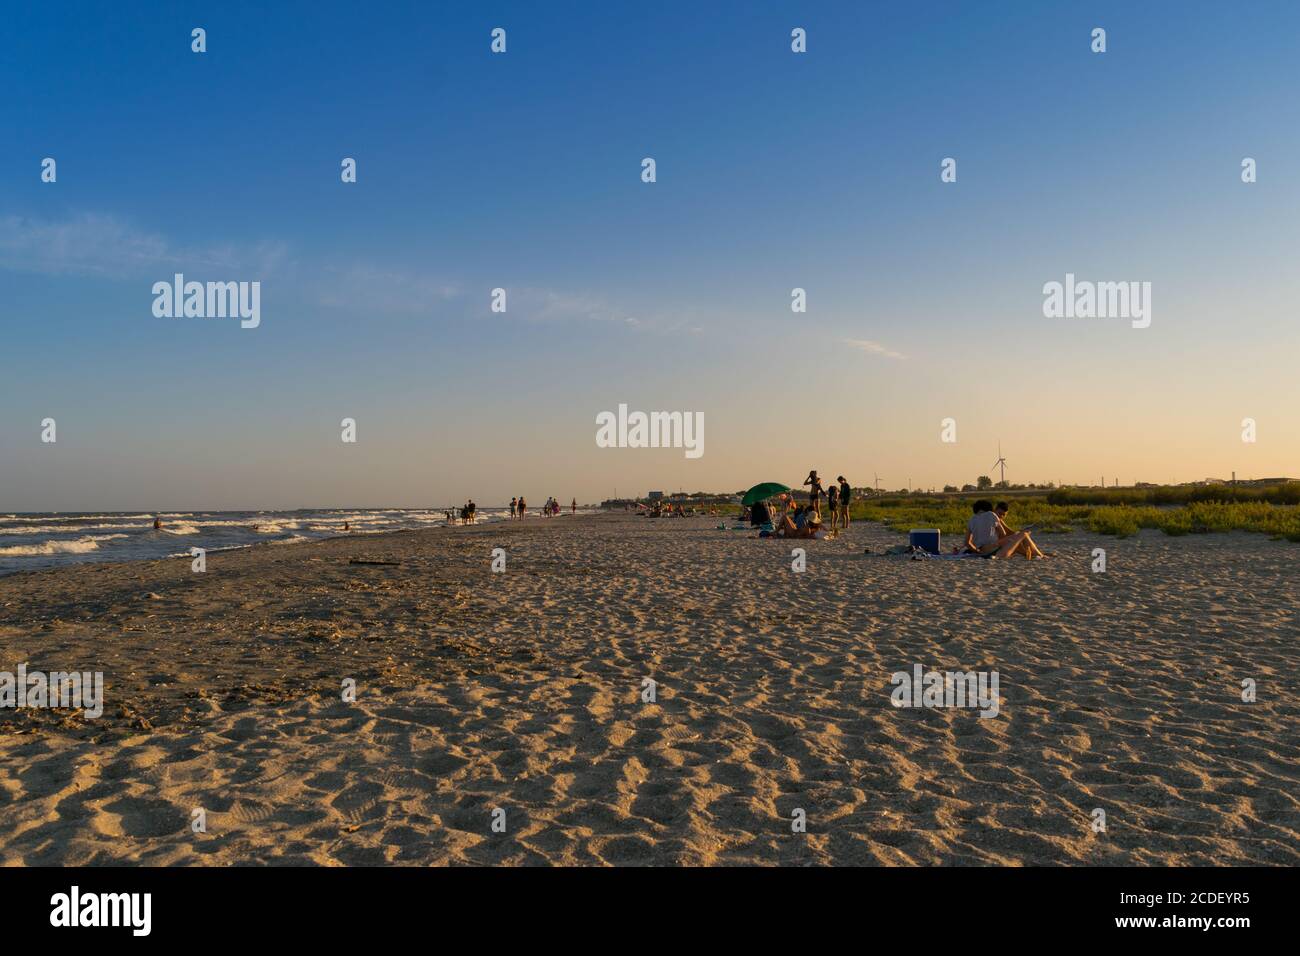 Corbu, Constanta, Romania - August 14, 2019: People enjoy a summer day sunset on the last virging beach in Corbu, Romania. Stock Photo